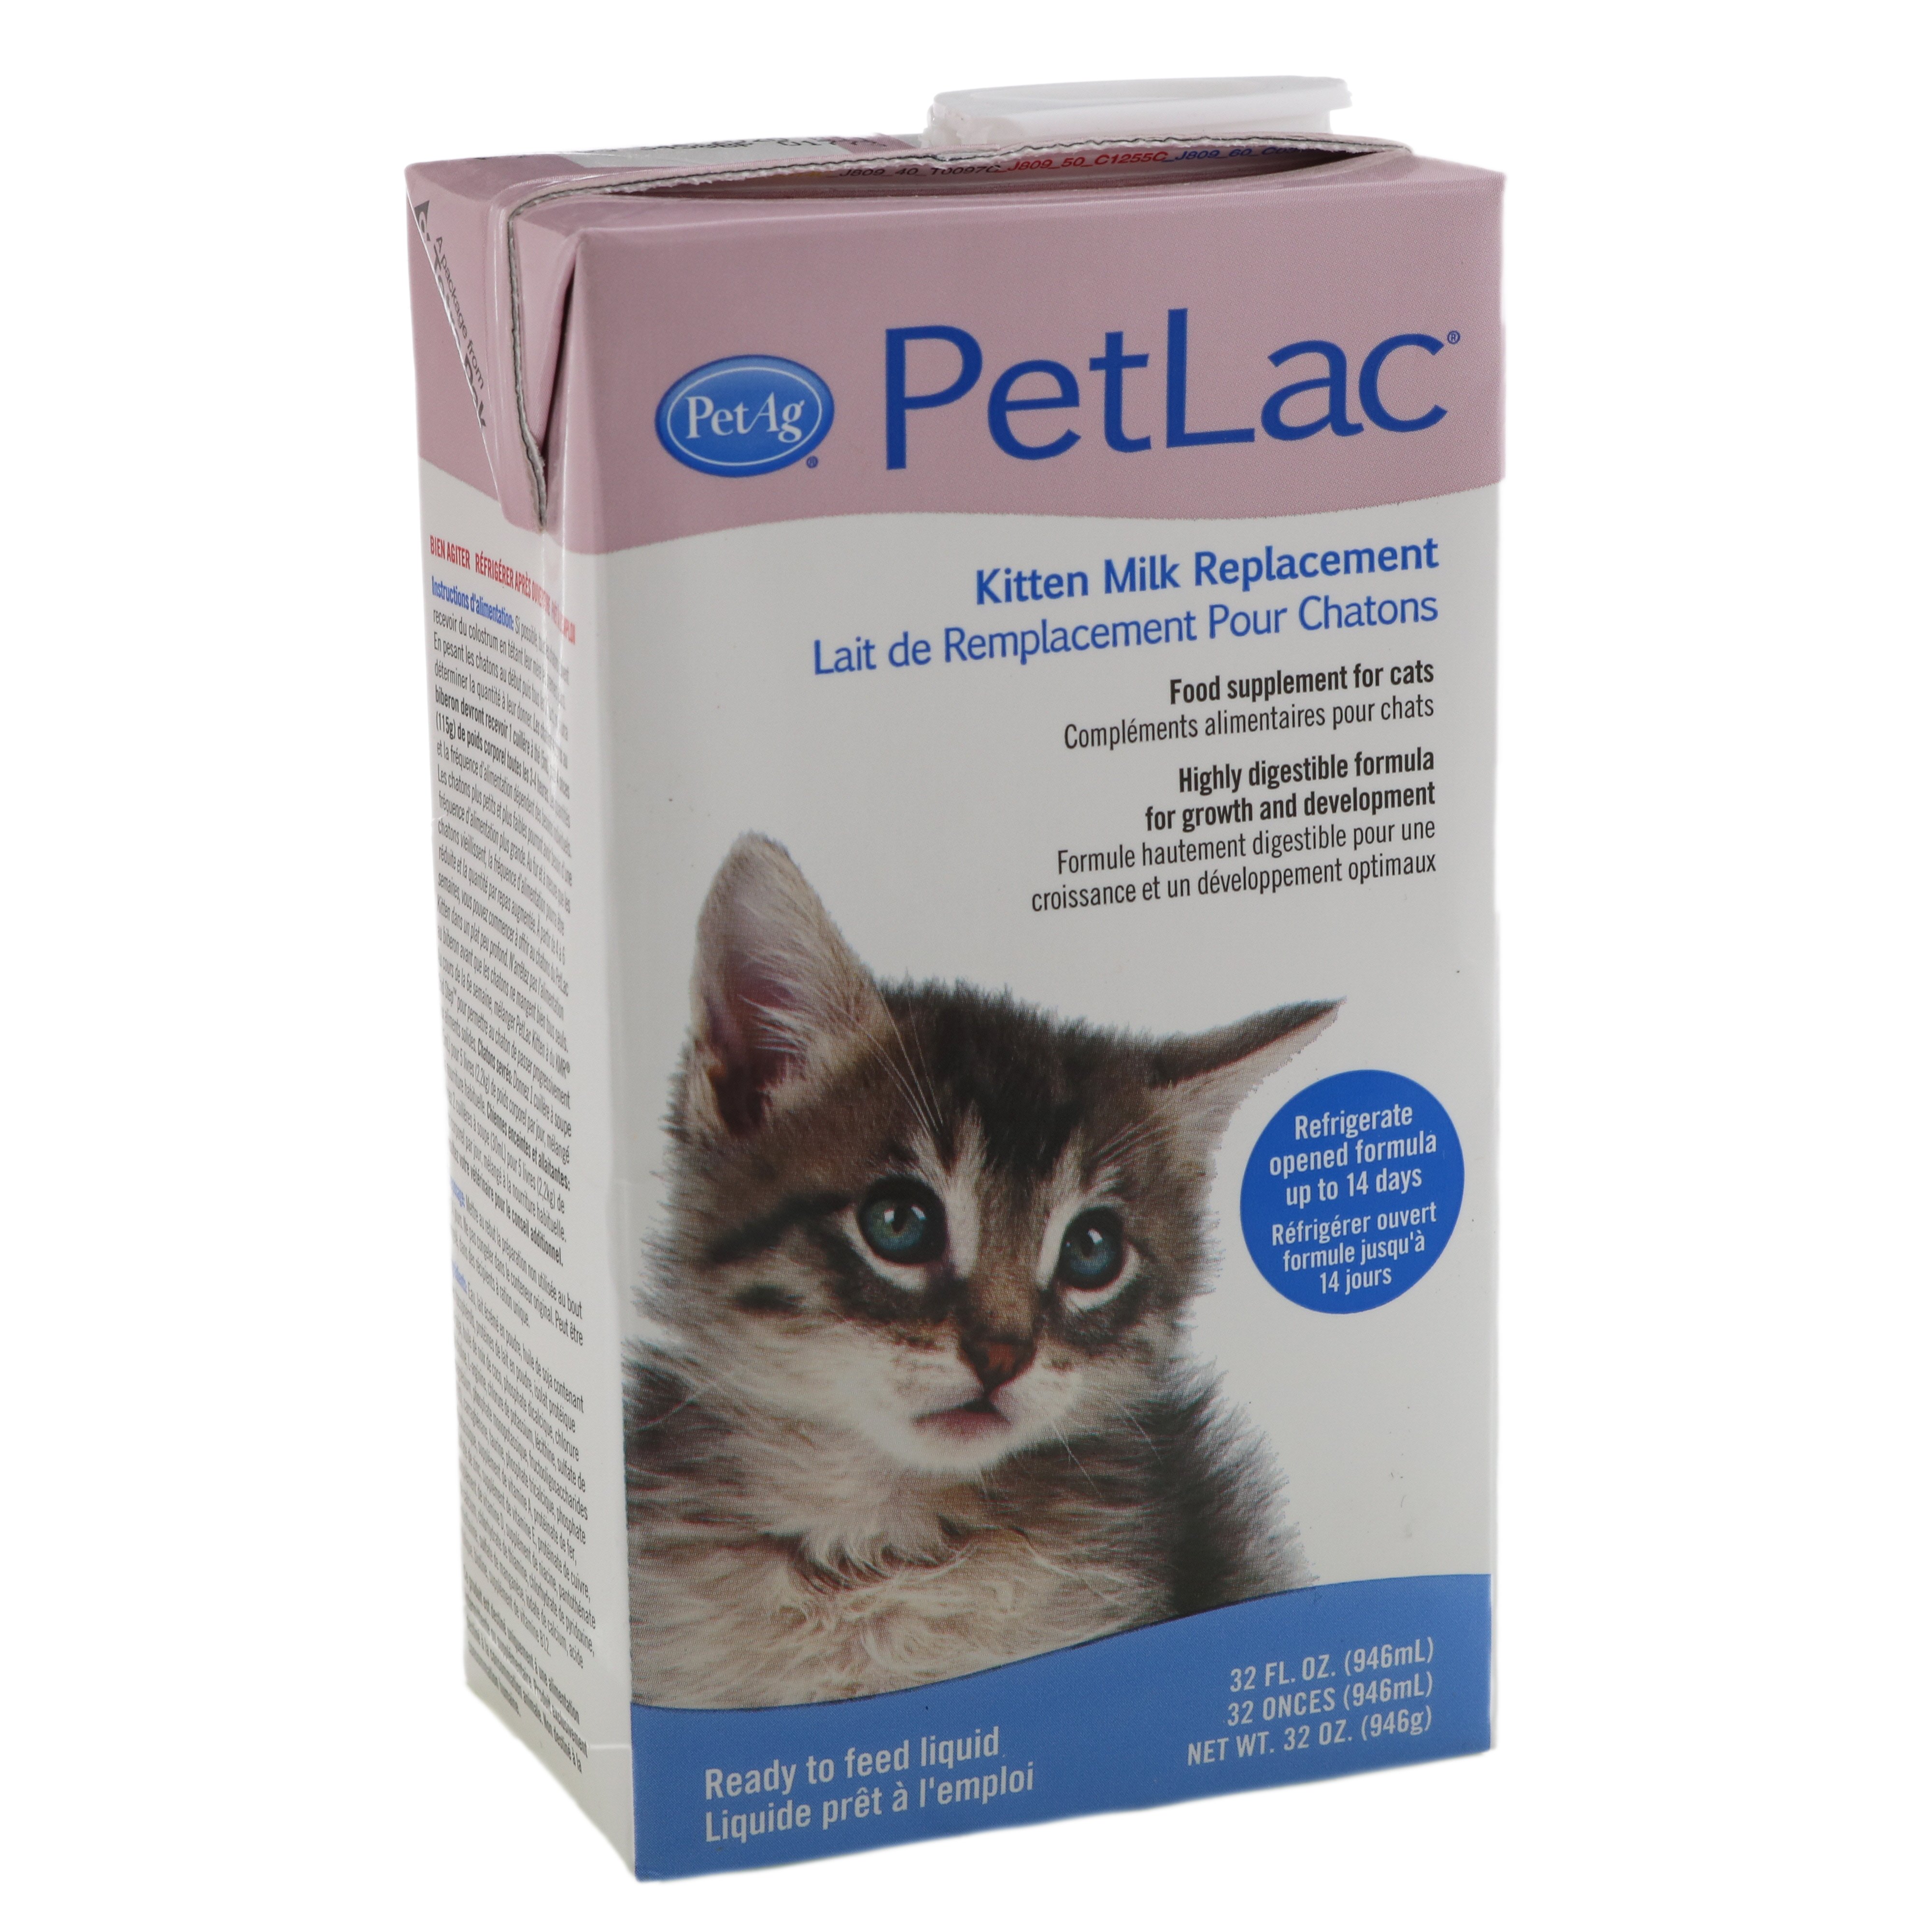 PetAg Petlac Kitten Milk Replacement - Shop Healthcare & Grooming at H-E-B